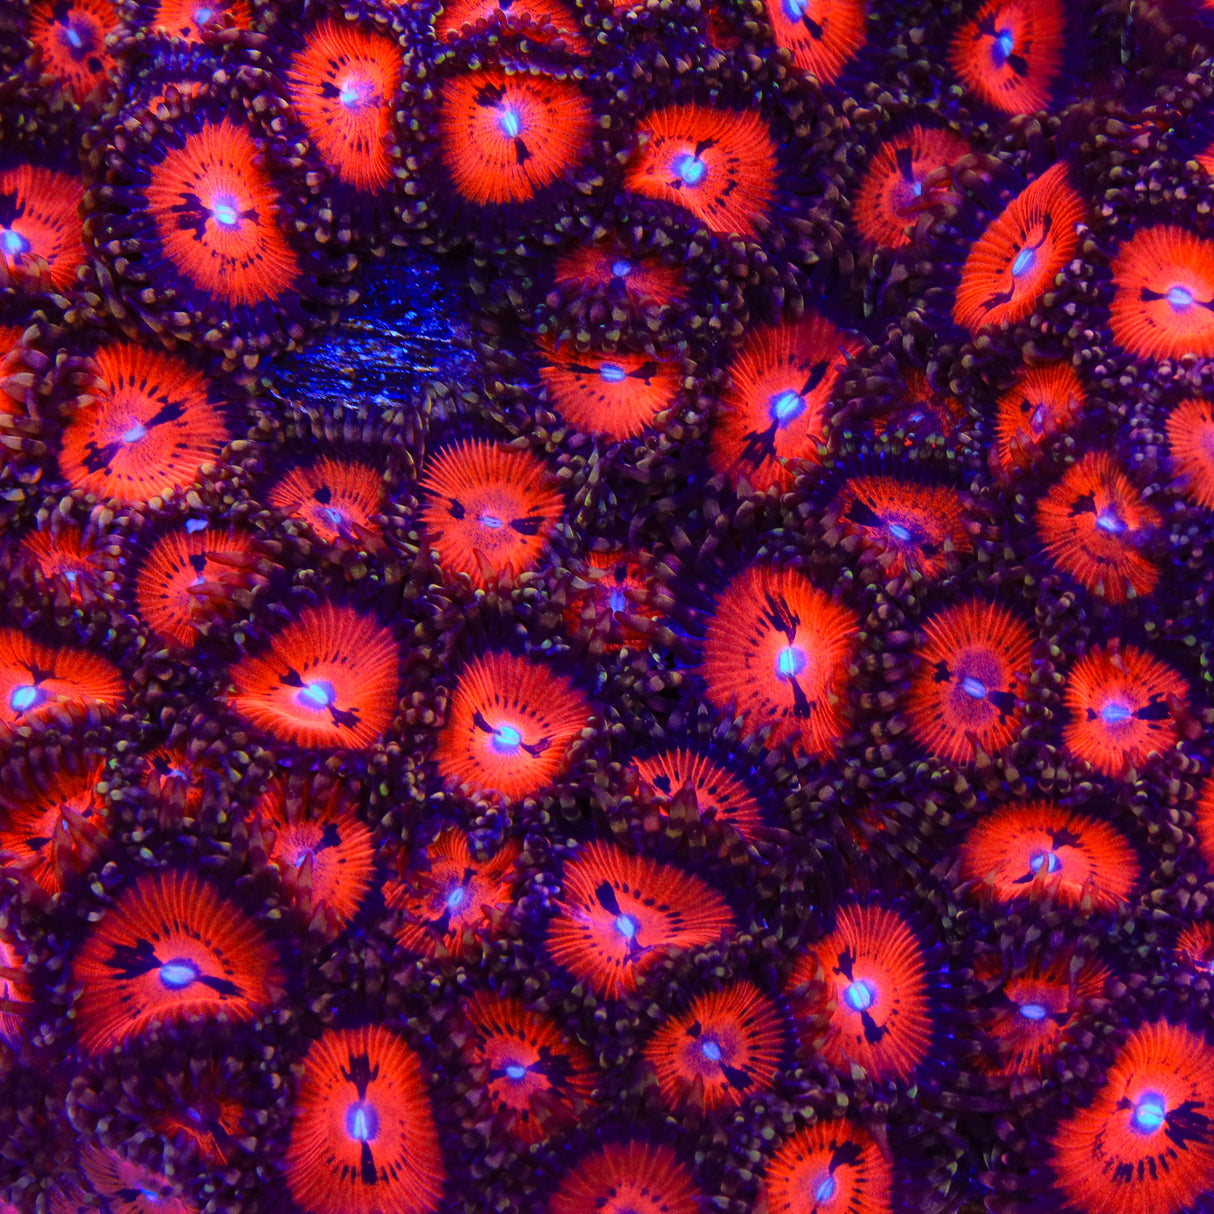 WWC Bloodsucker Zoanthid Coral - Top Shelf Aquatics